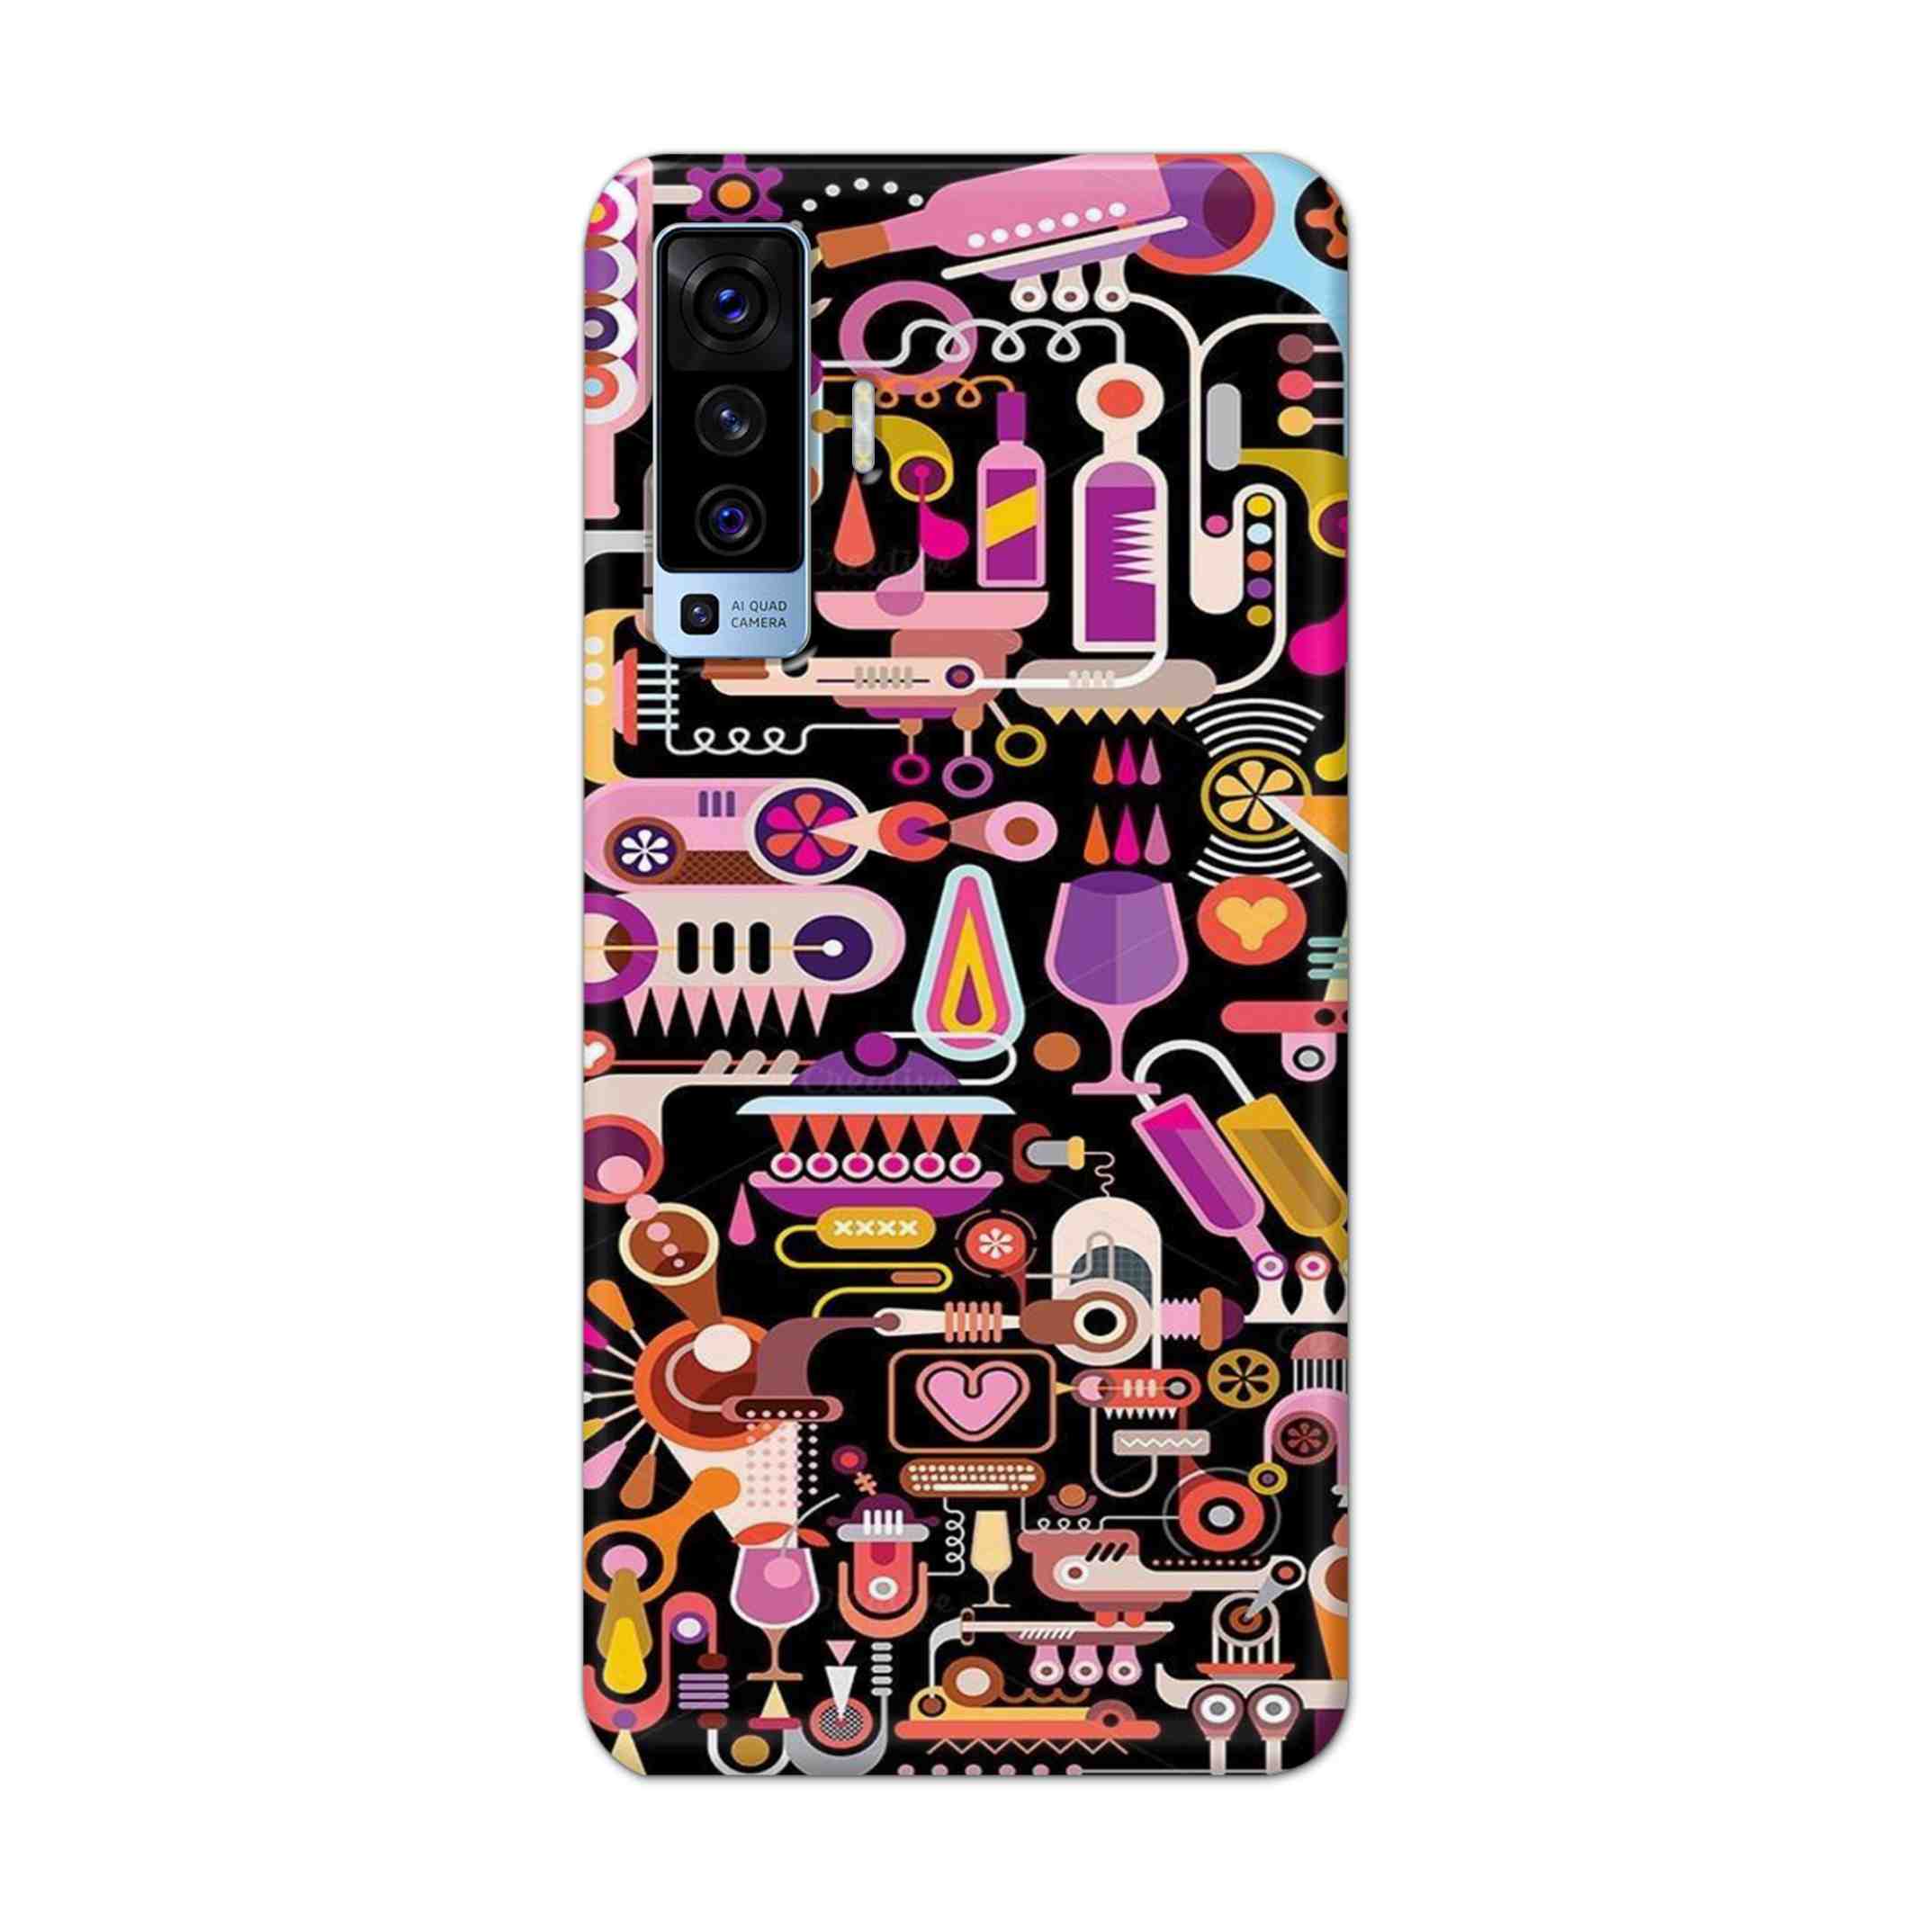 Buy Lab Art Hard Back Mobile Phone Case Cover For Vivo X50 Online